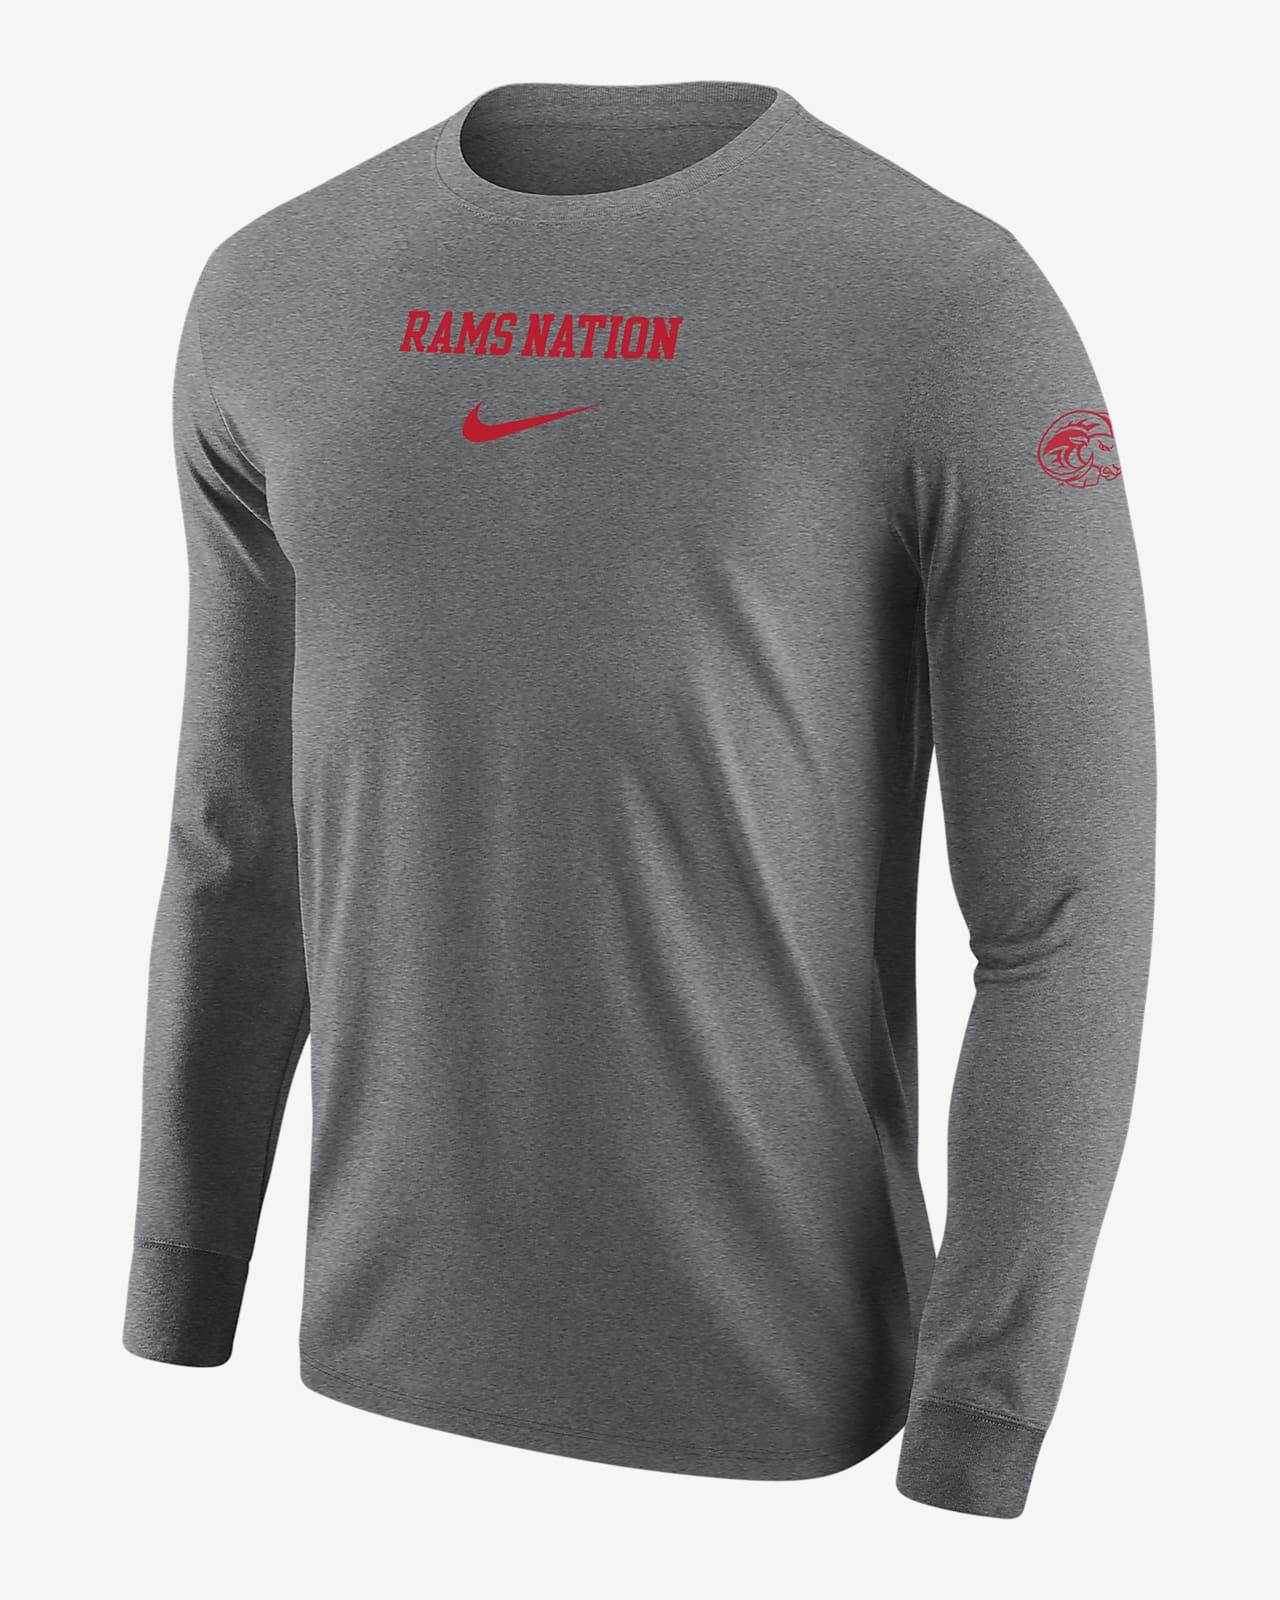 Winston-Salem Men's Nike College Long-Sleeve T-Shirt